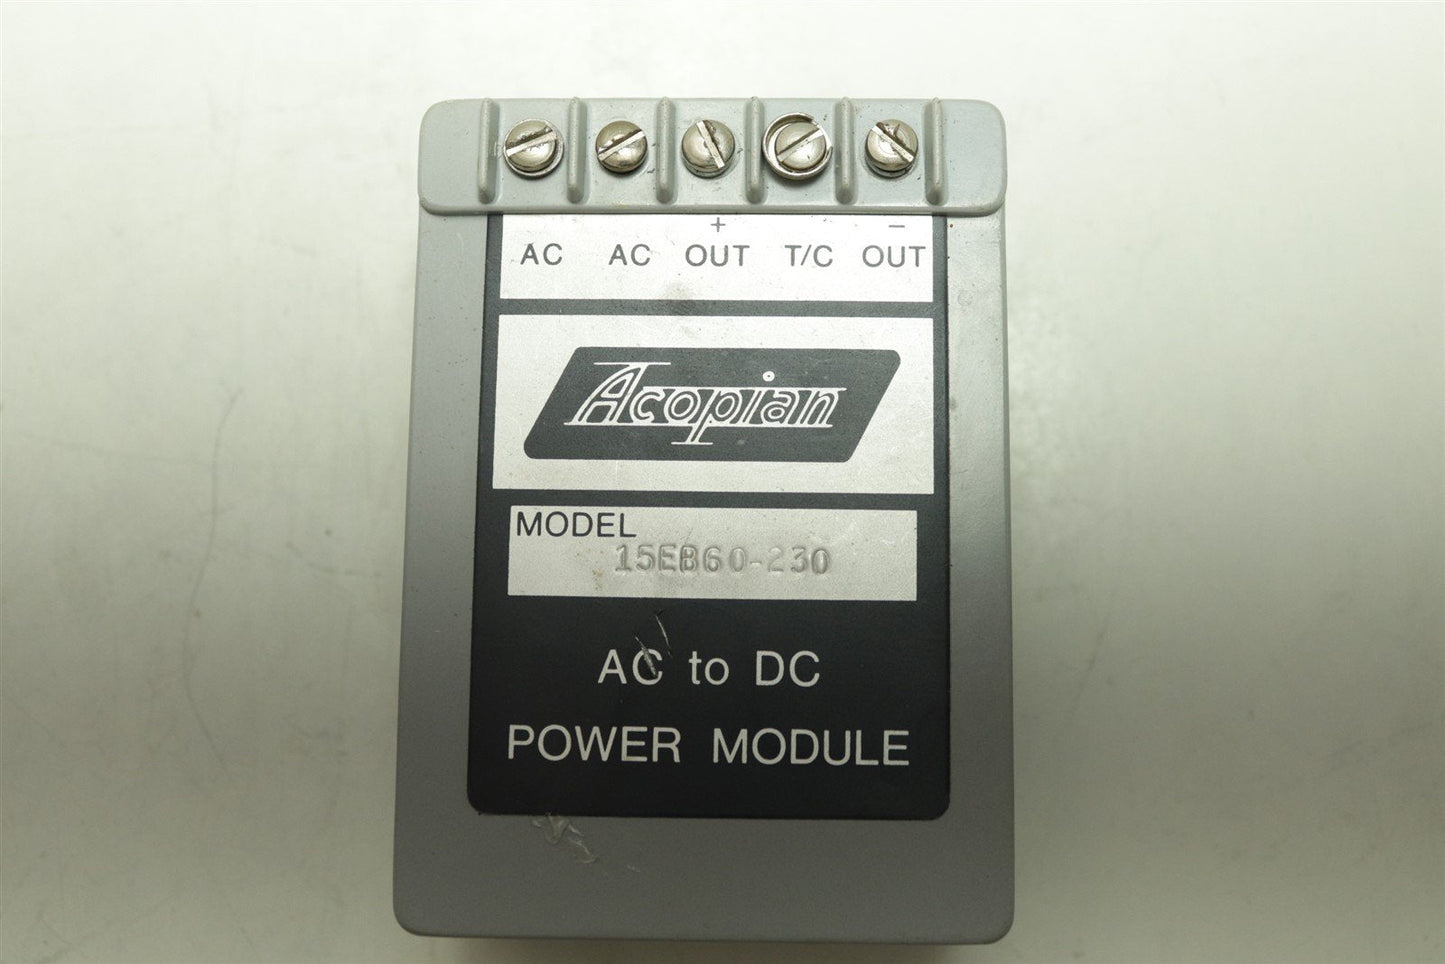 Acopian 15EB60-230 power module